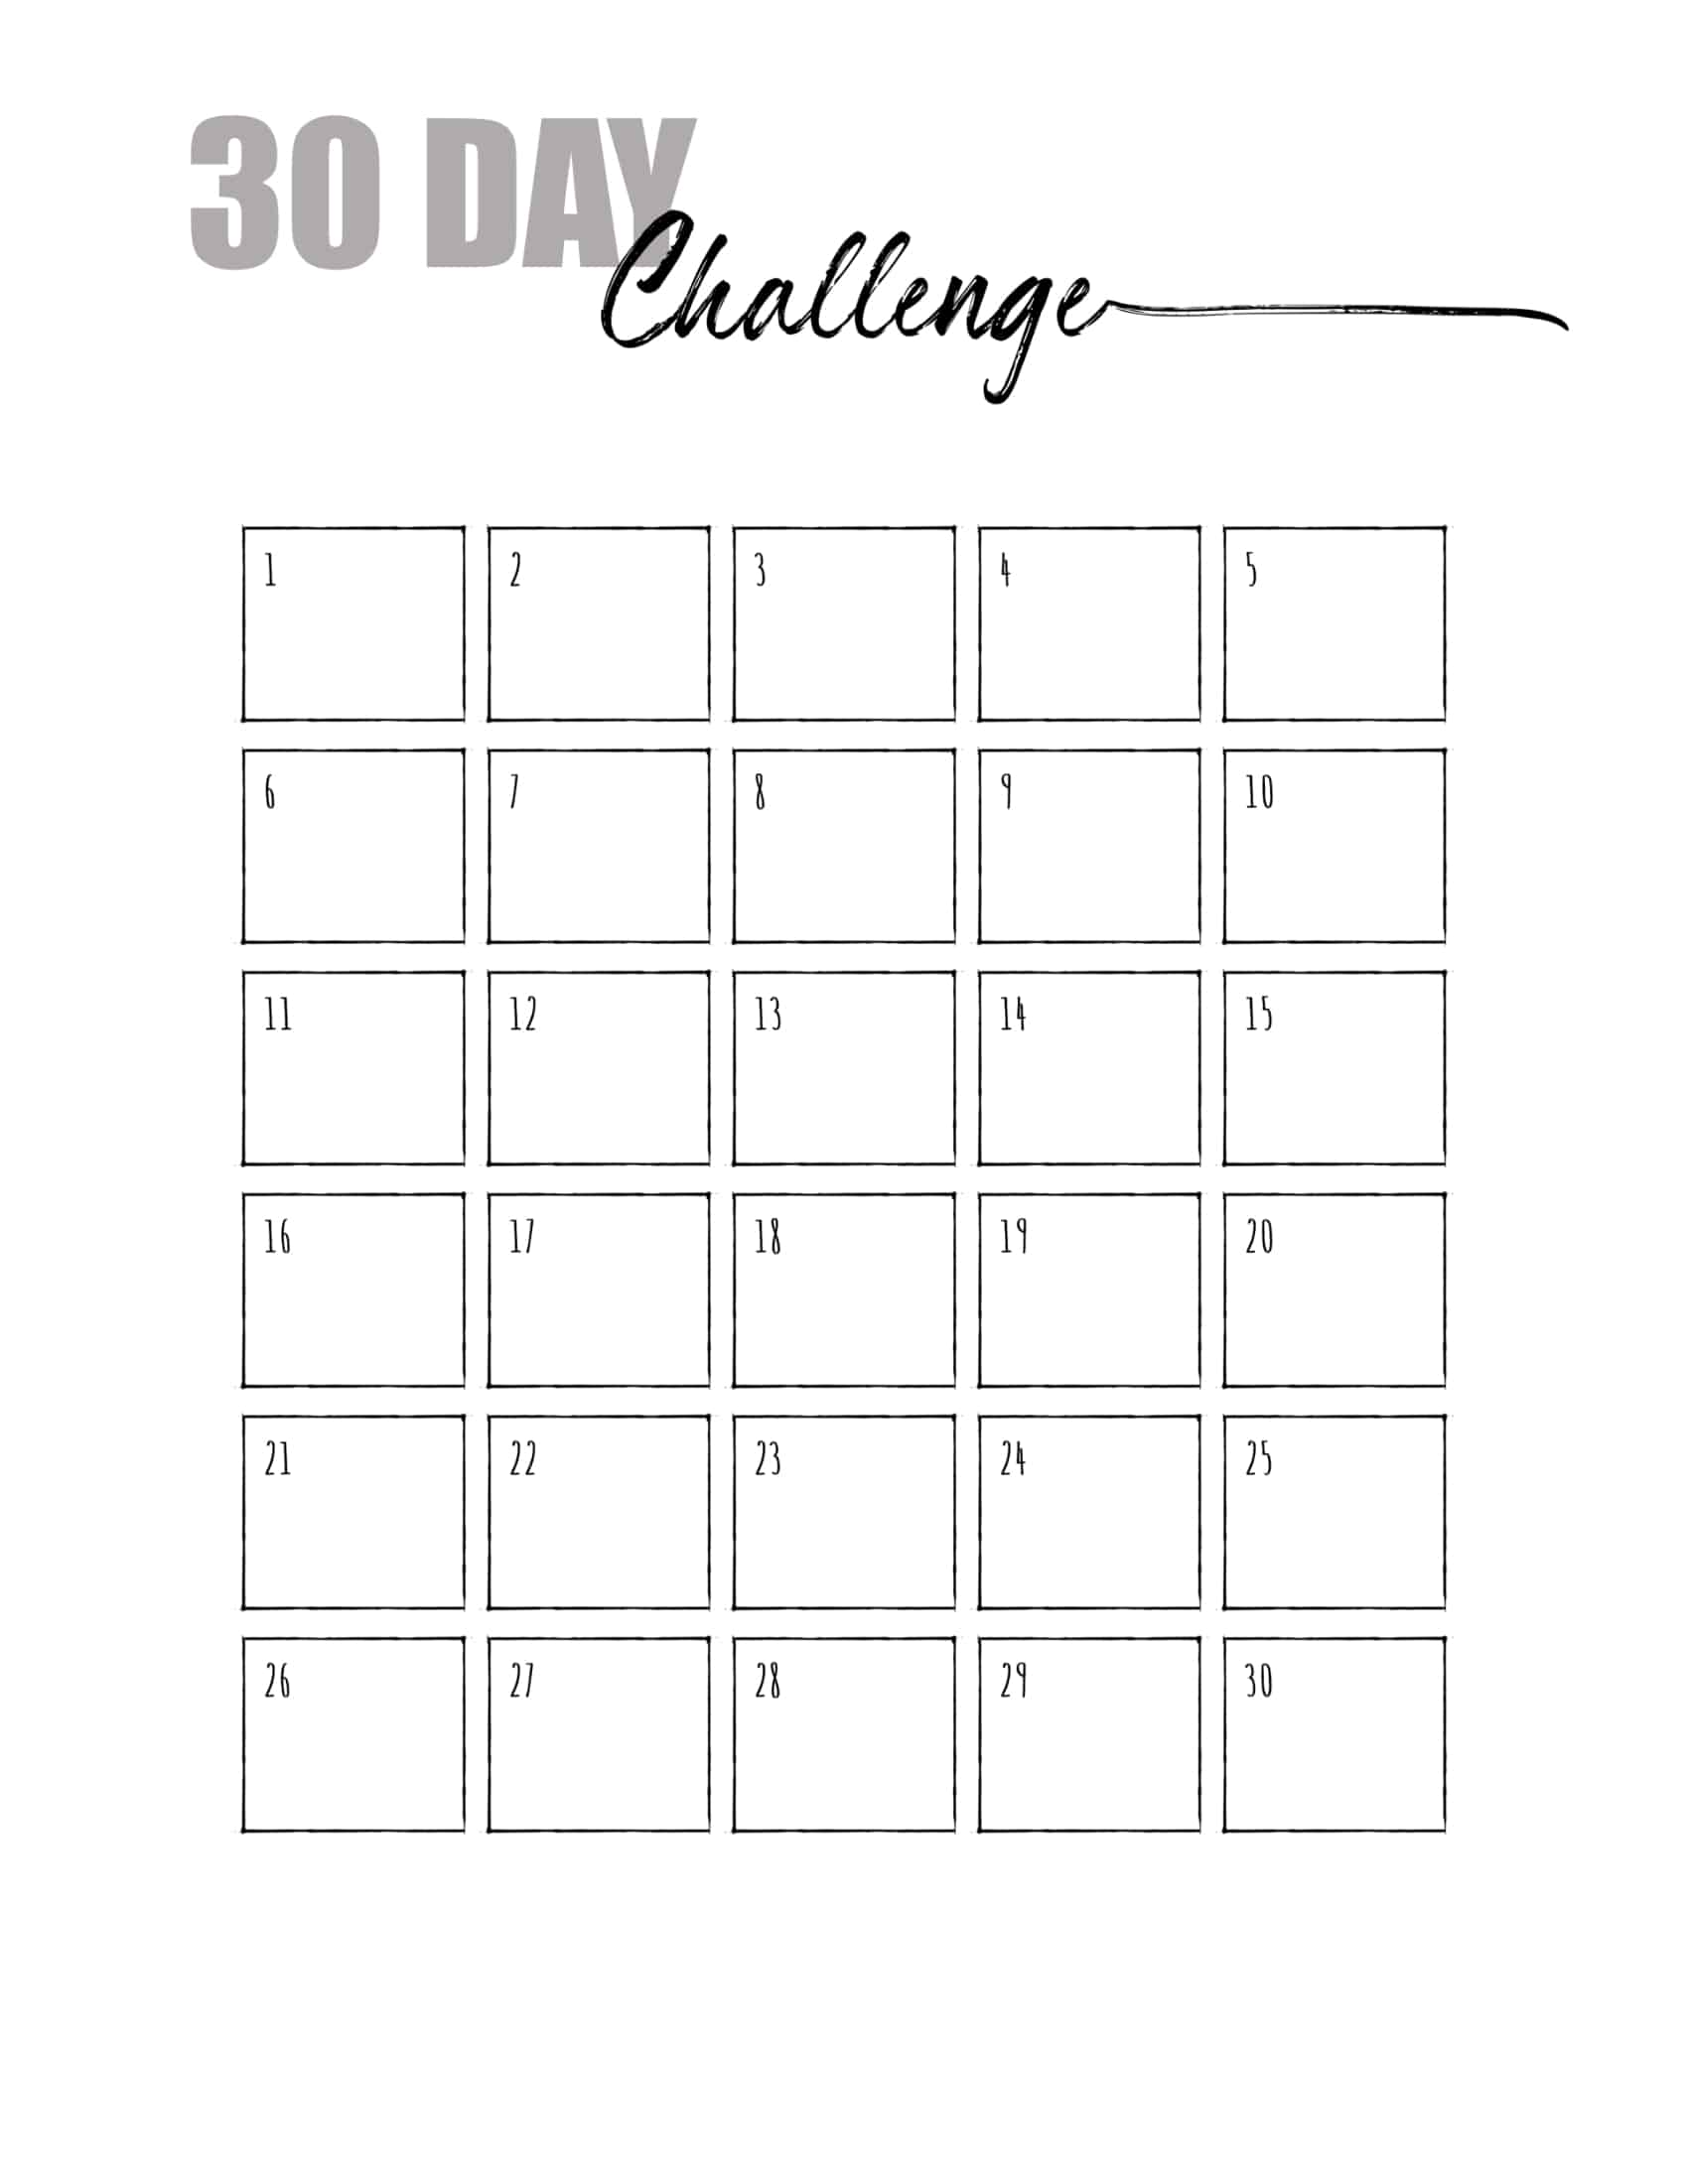 30 day plank challenge calendar printable 15